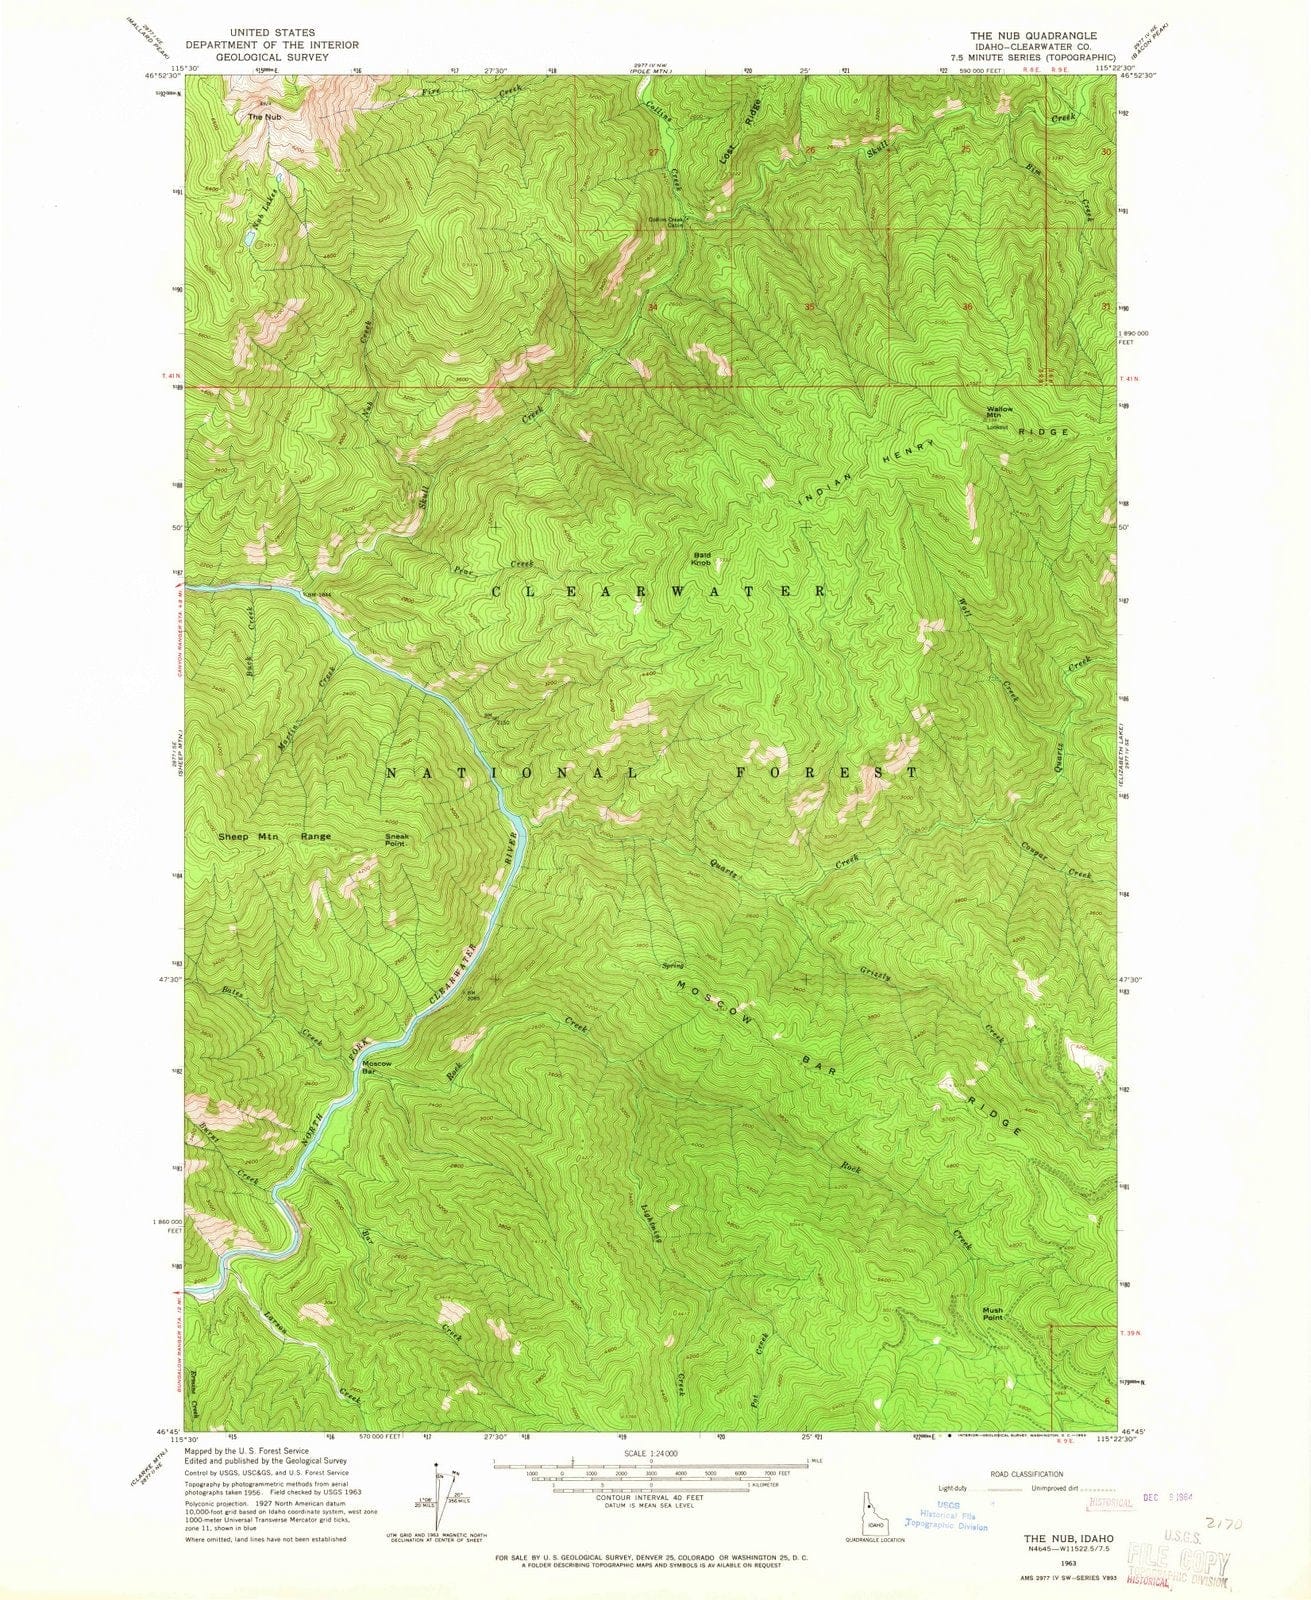 1963 The Nub, ID - Idaho - USGS Topographic Map